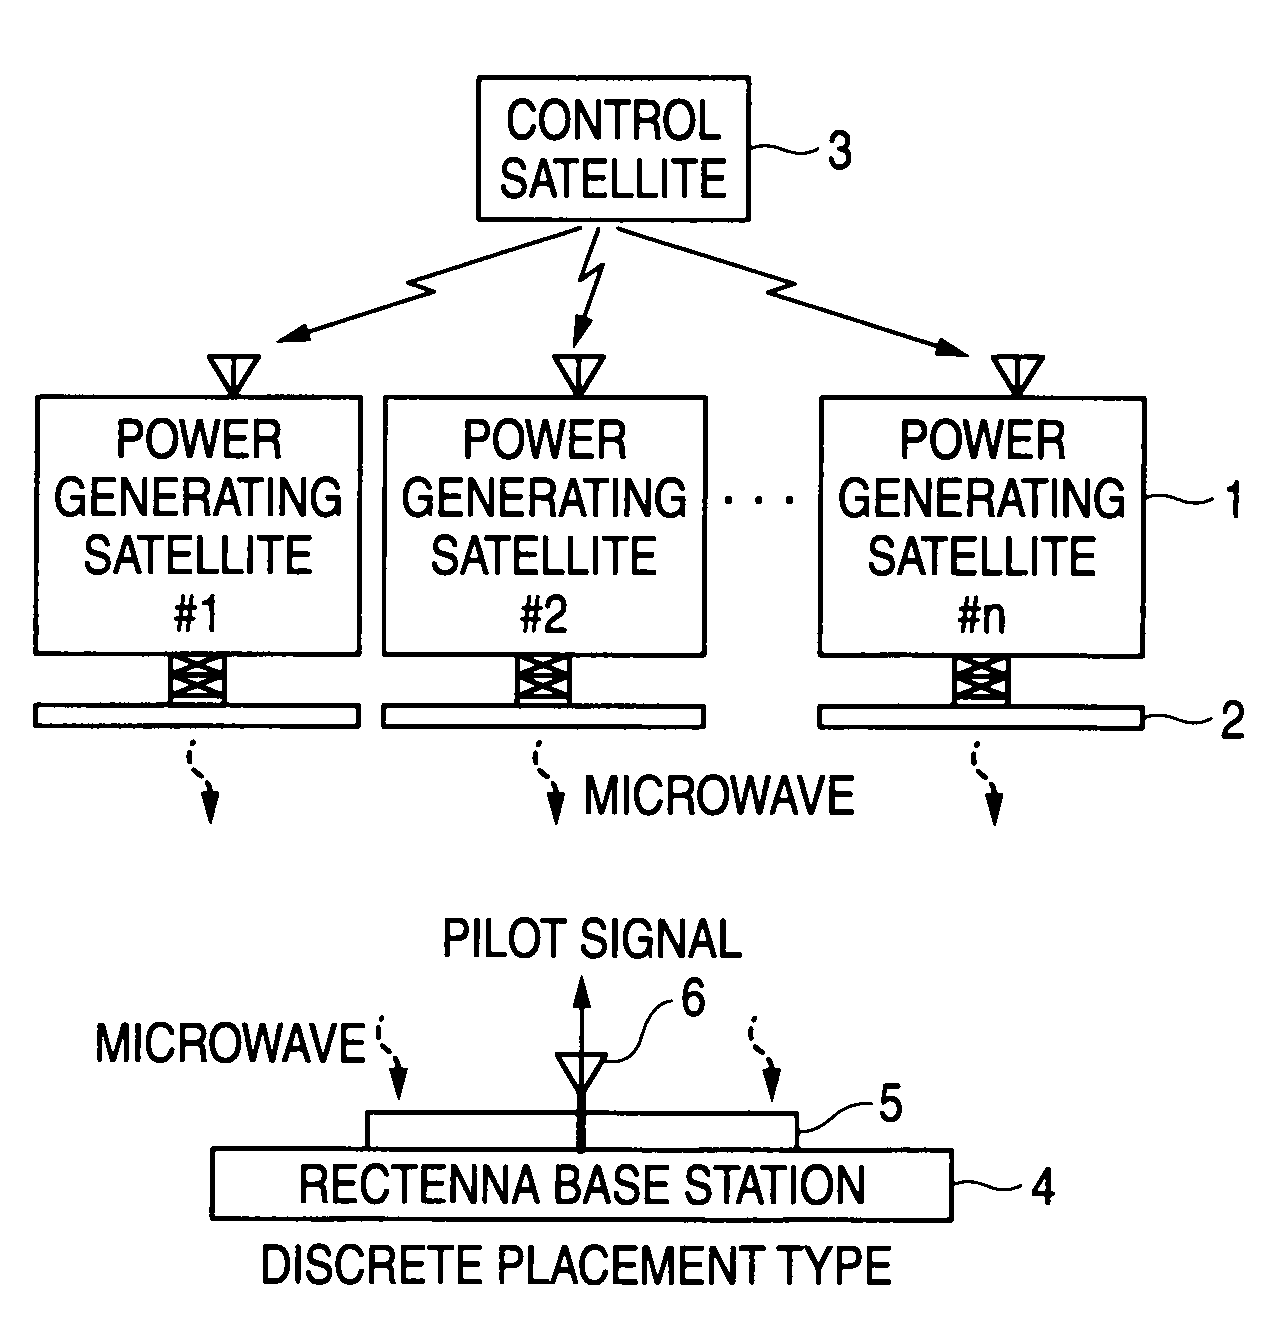 Wireless power transfer system, power transmitter, and rectenna base station